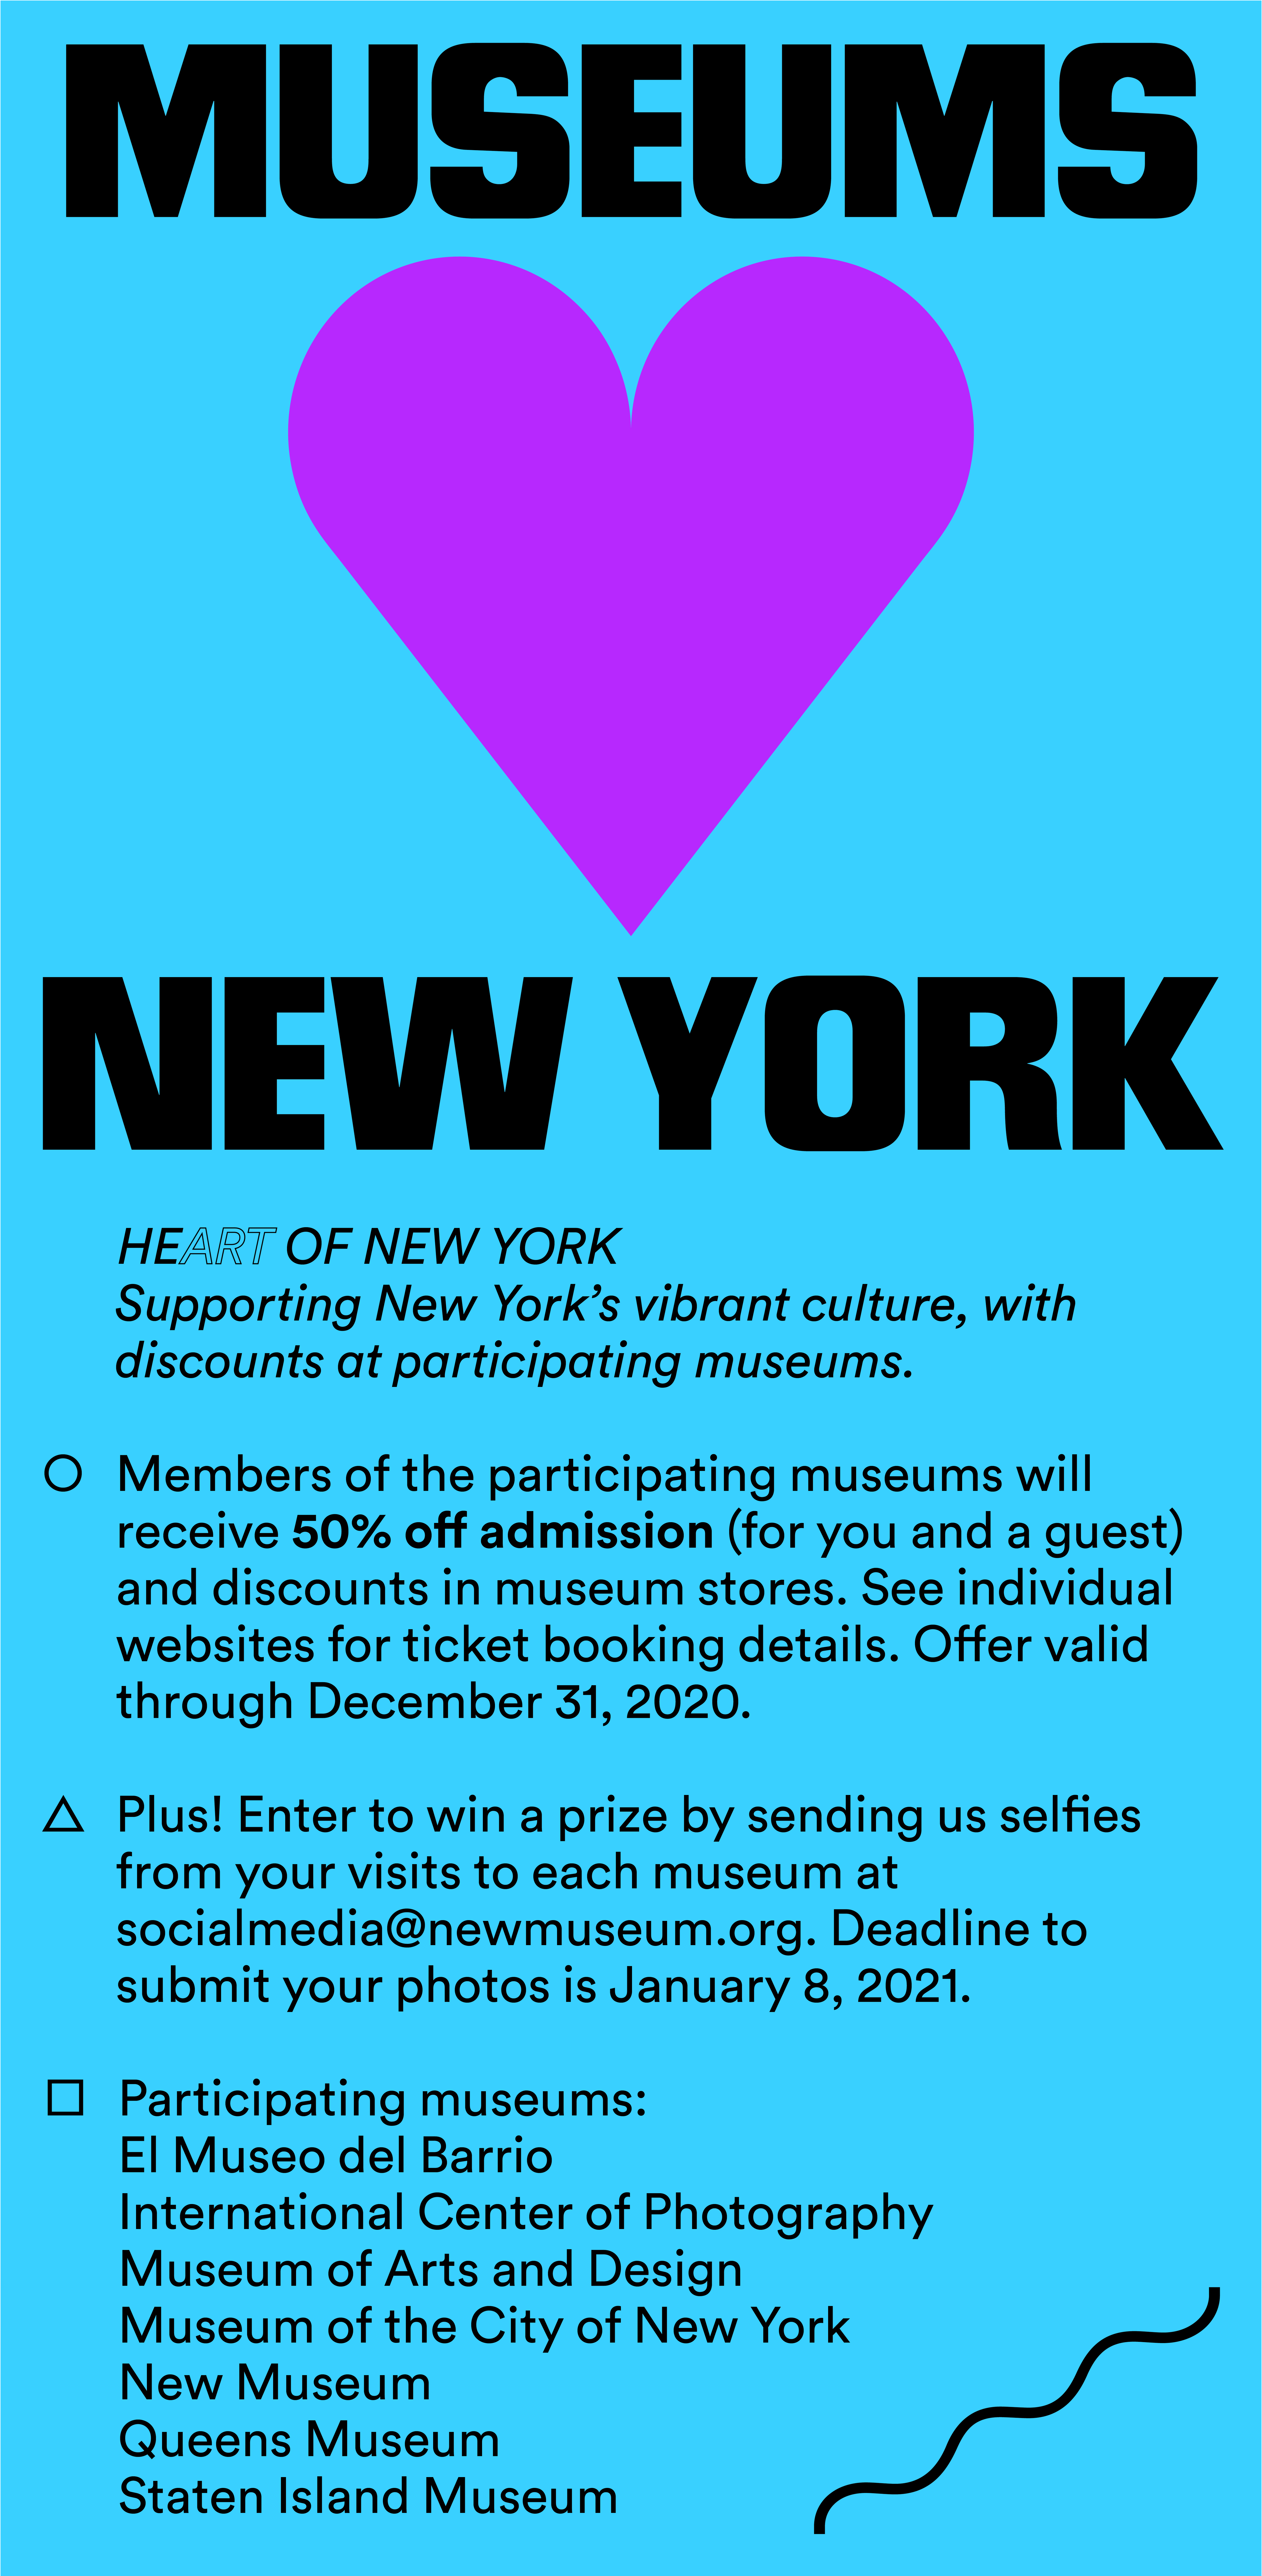 HeART of New York details